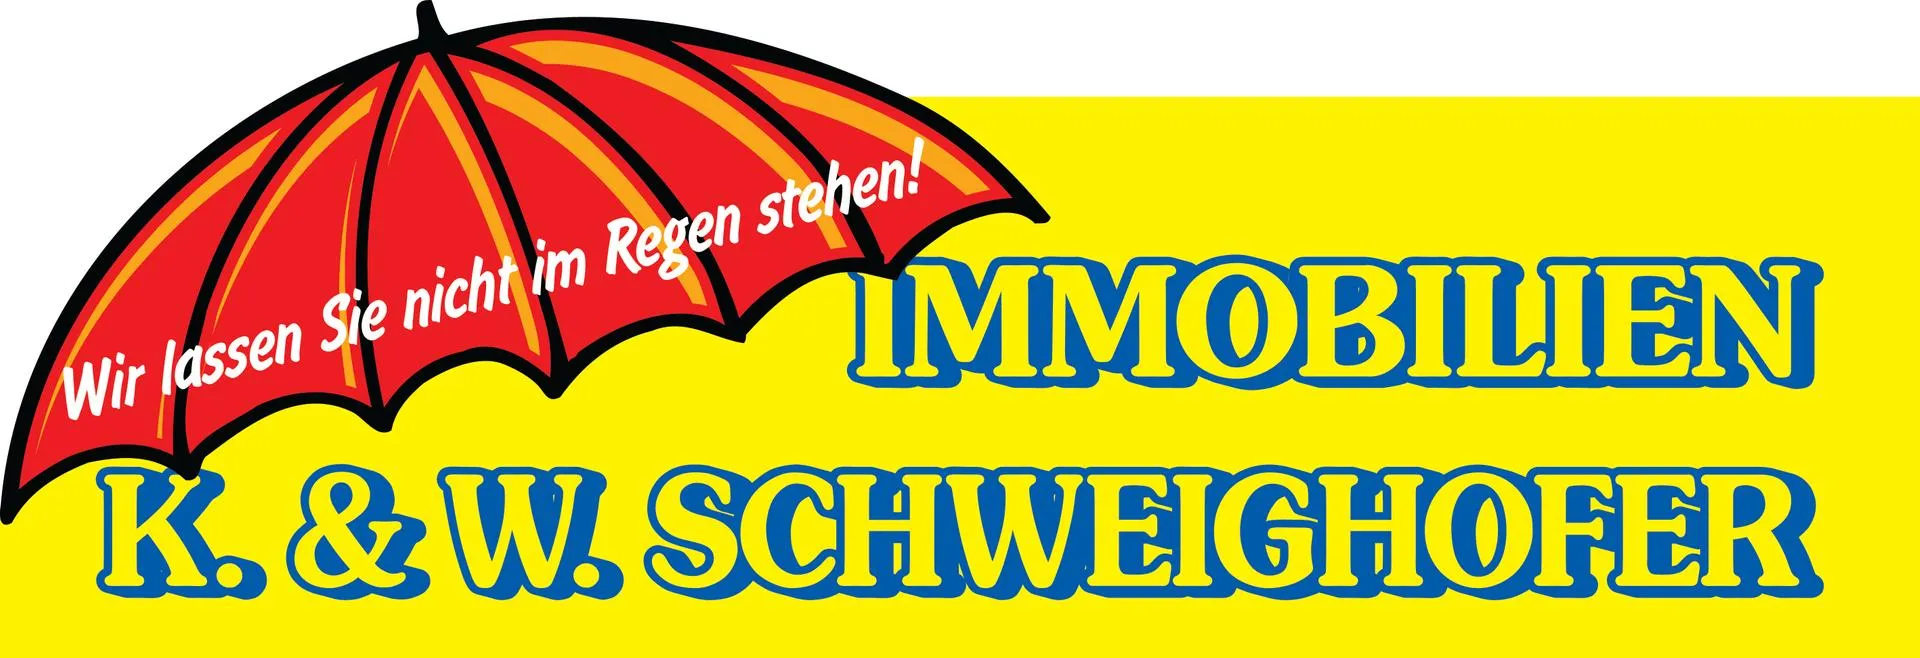 Makler Immobilien K.u.W. Schweighofer logo